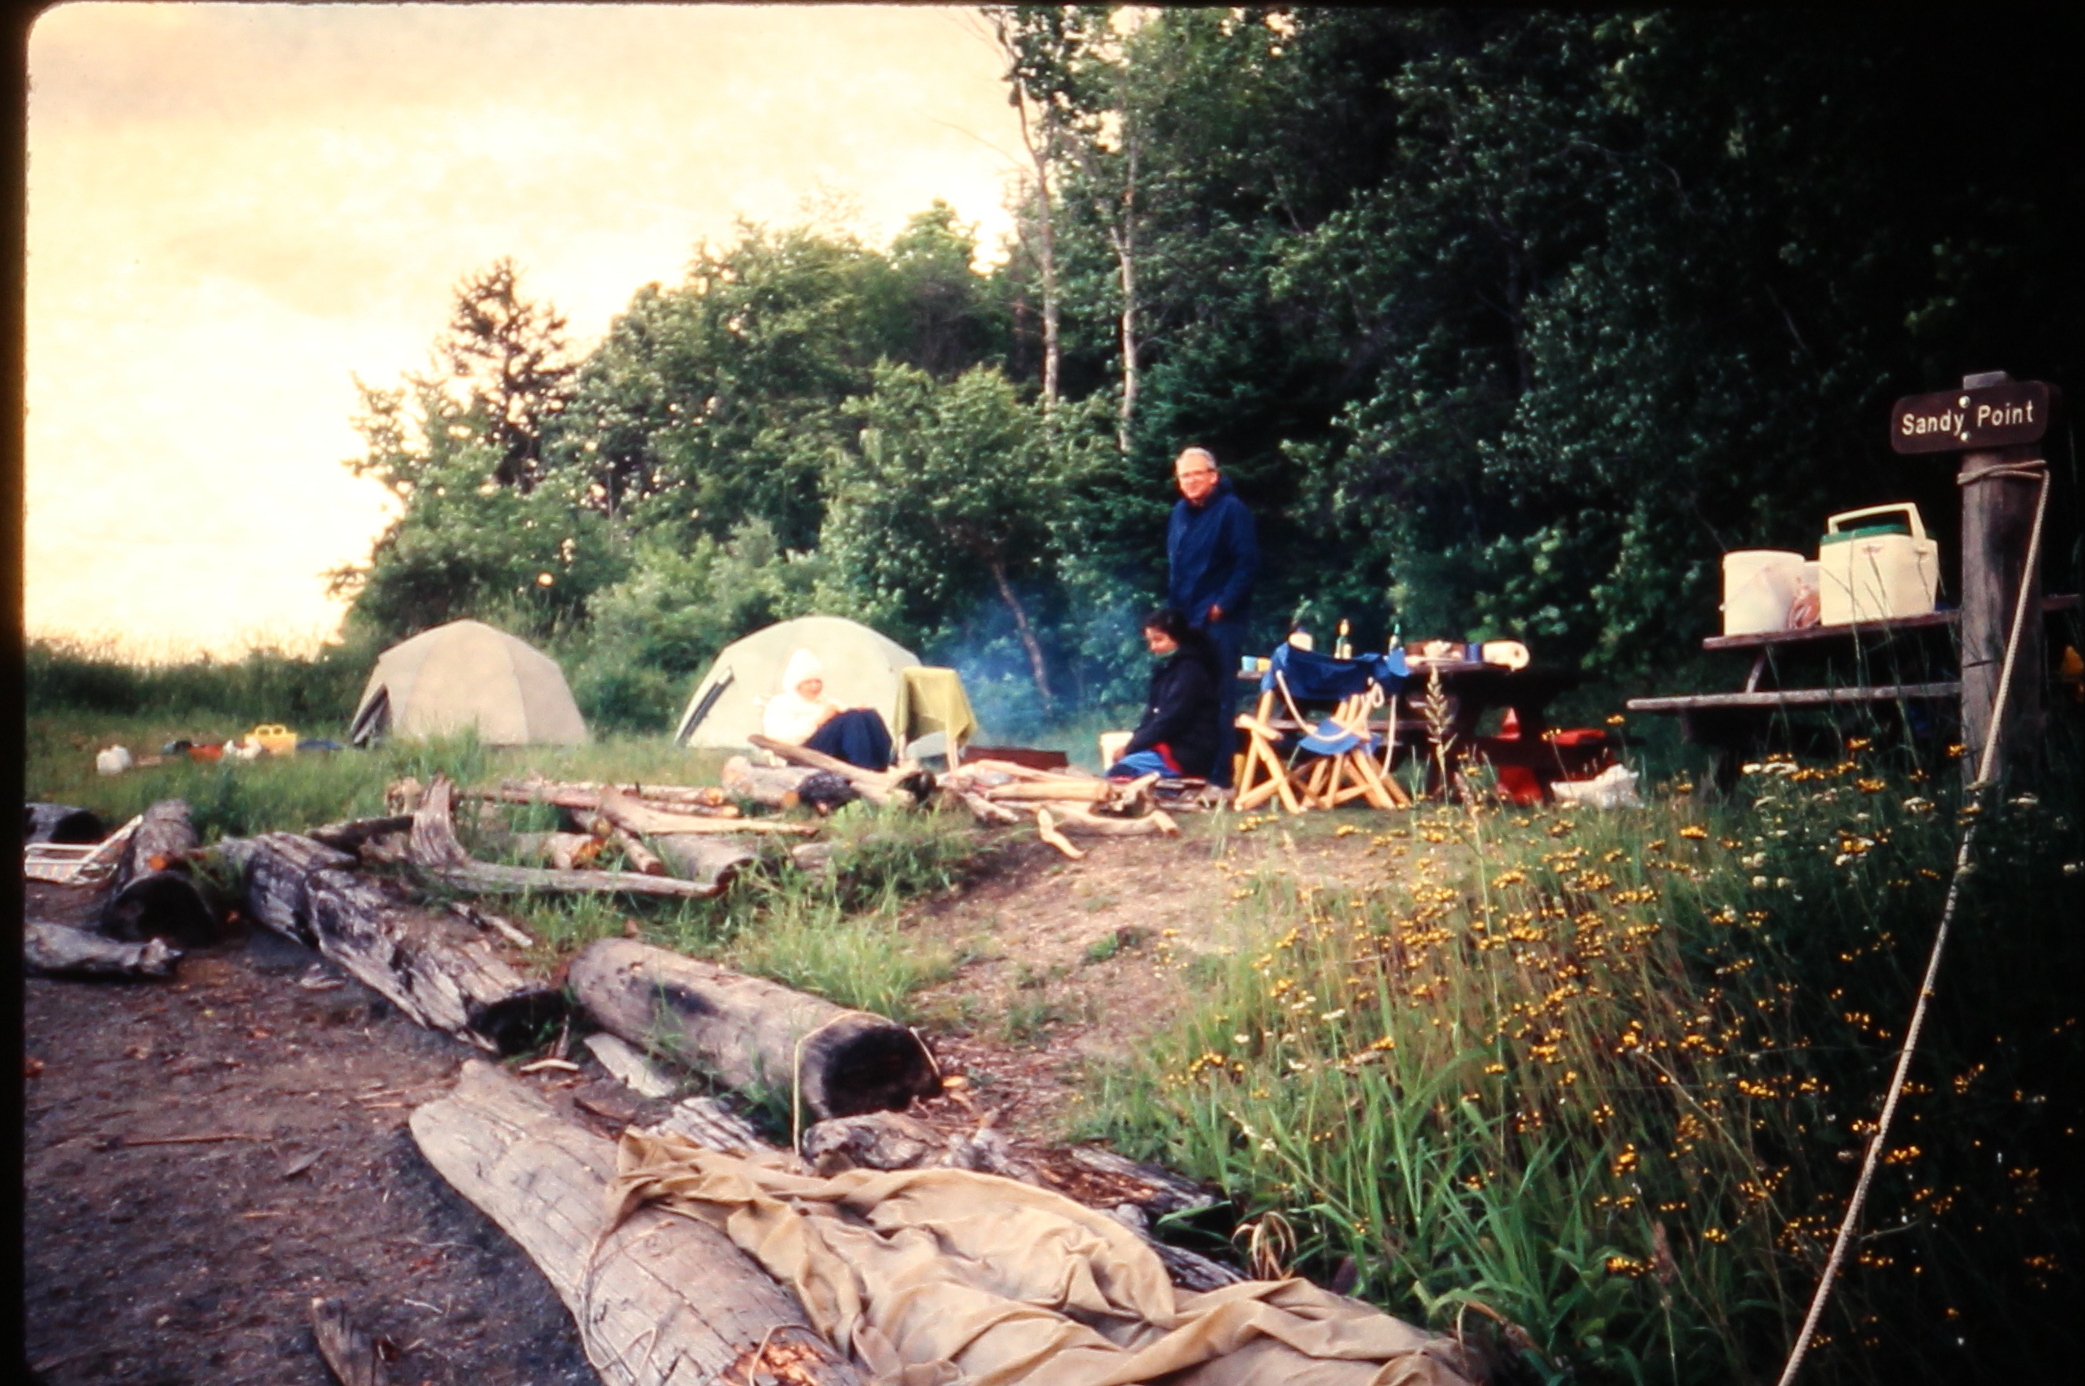 19890900.18 - USA ME xx xx PenobscottRiver - LisaGoulet DaveSands - Camp at Sandy Point - MB01T01B09S18.JPG